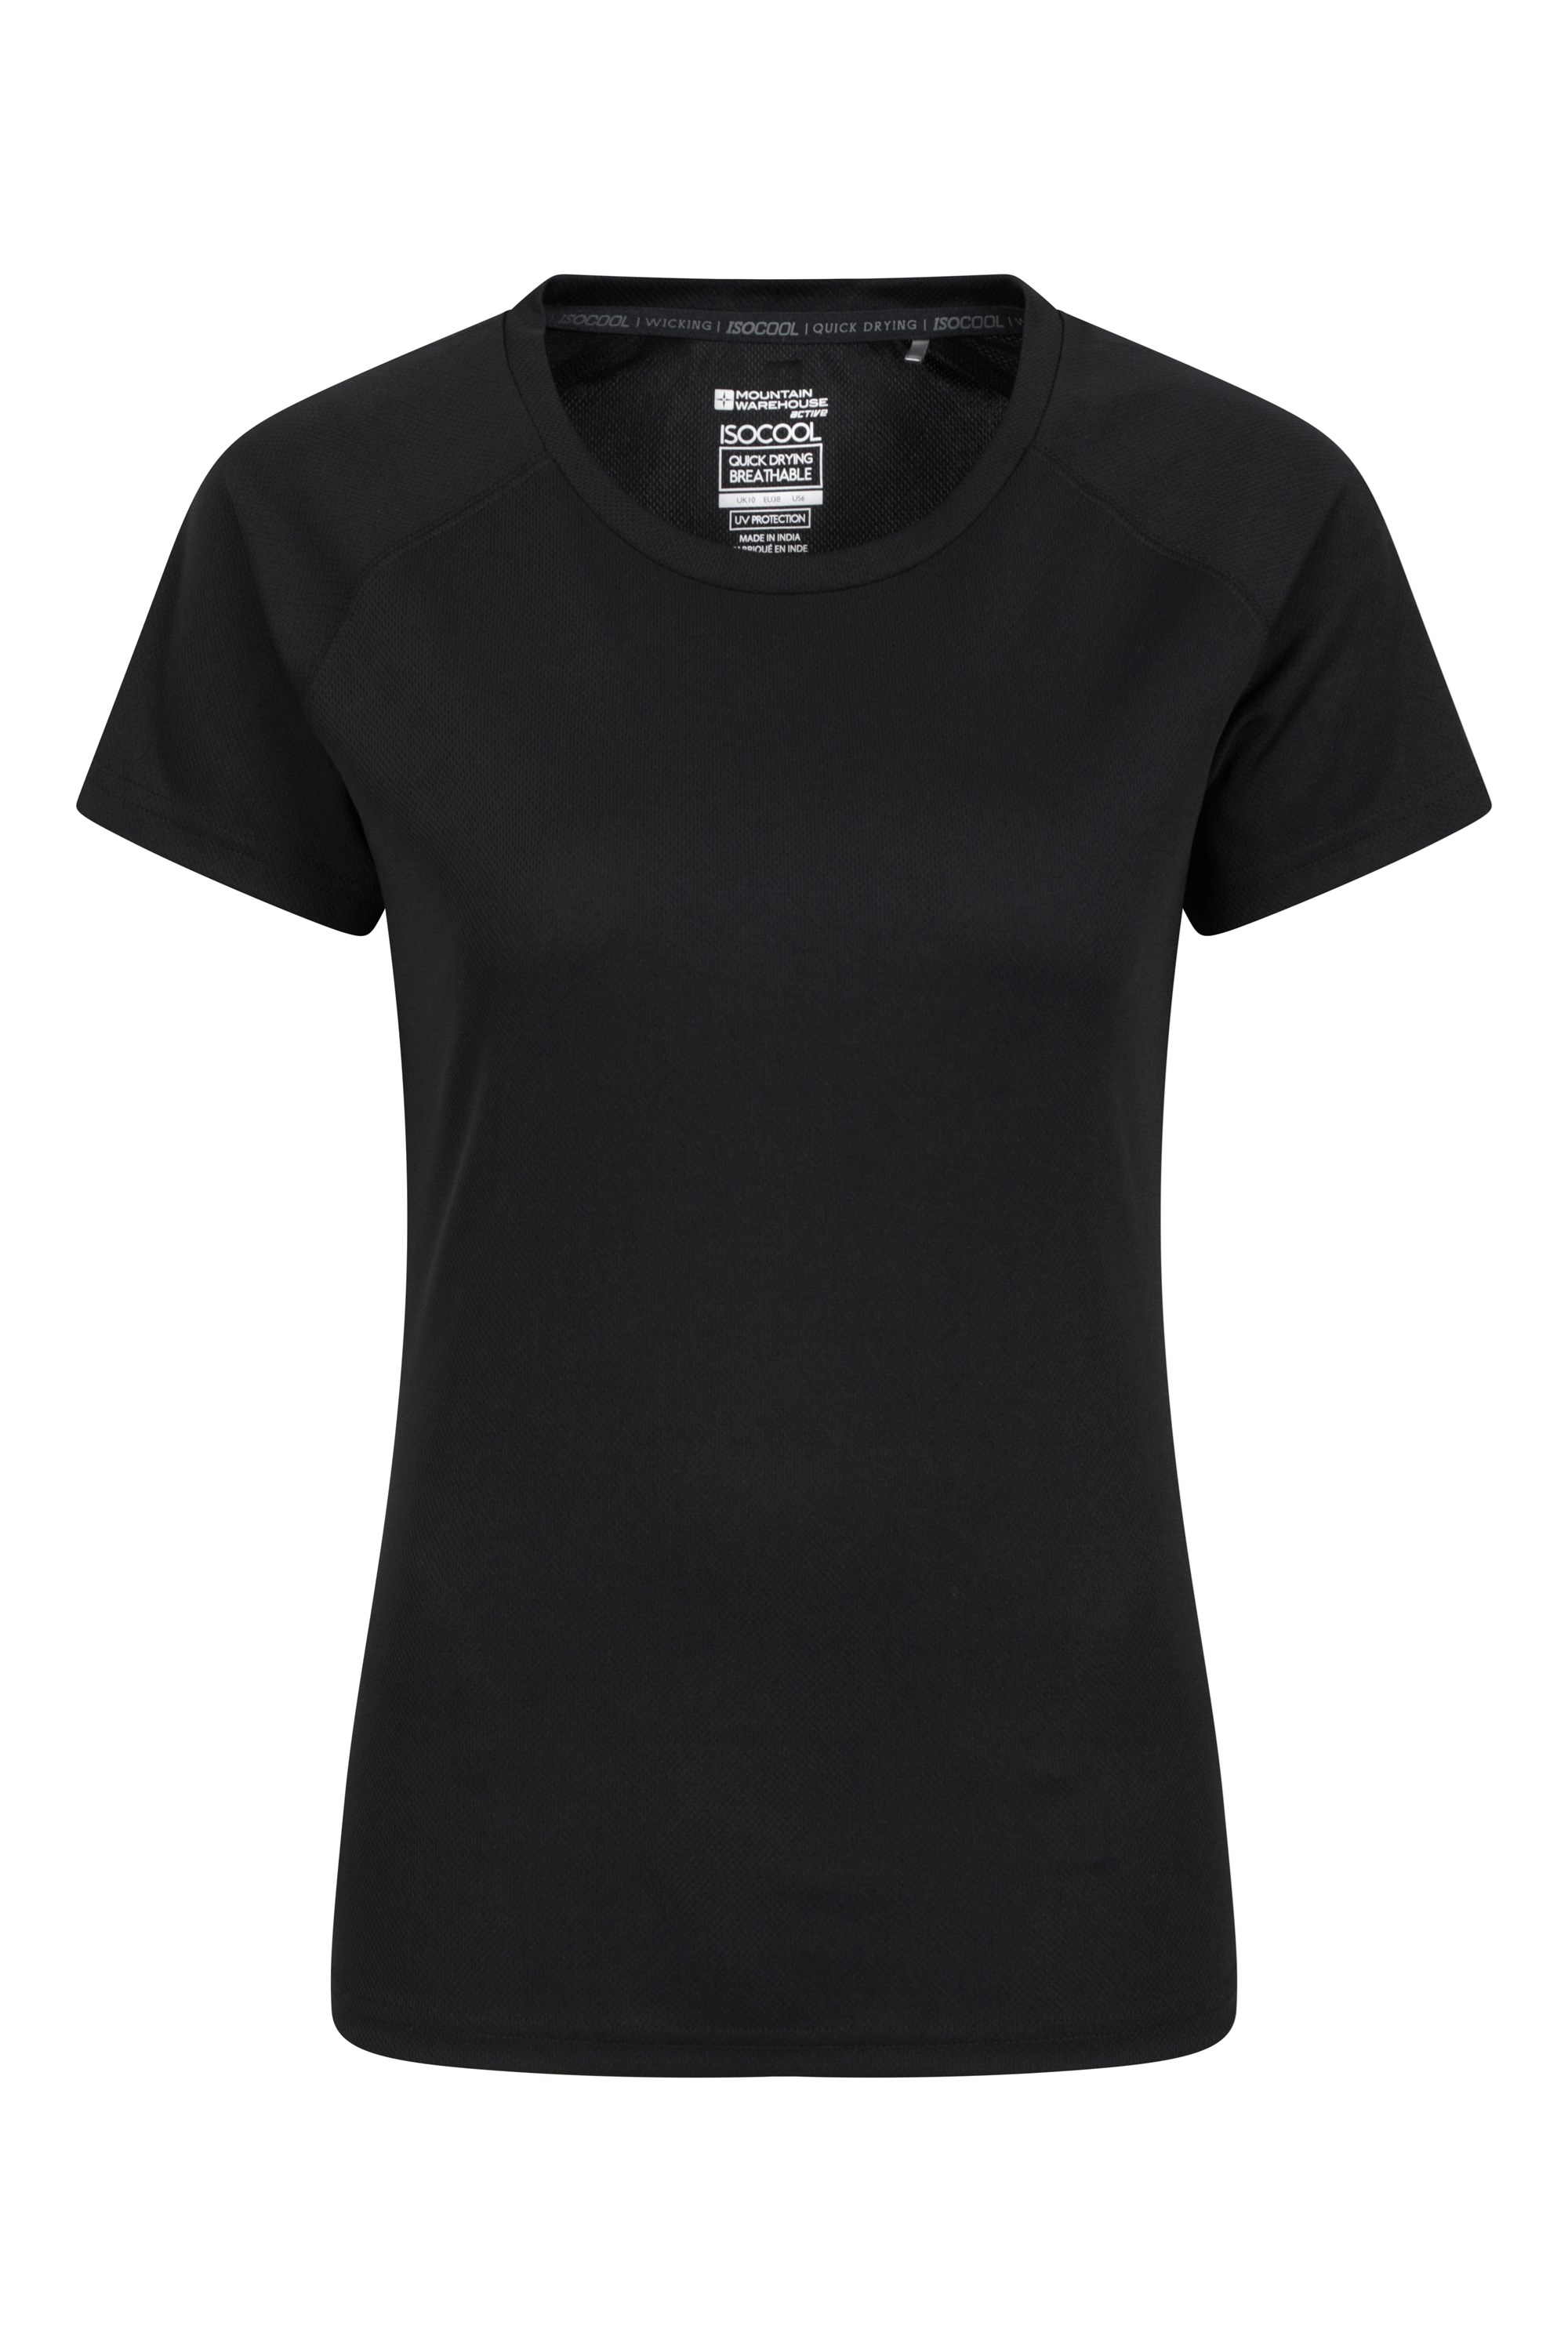 Endurance Womens T-shirt - Black